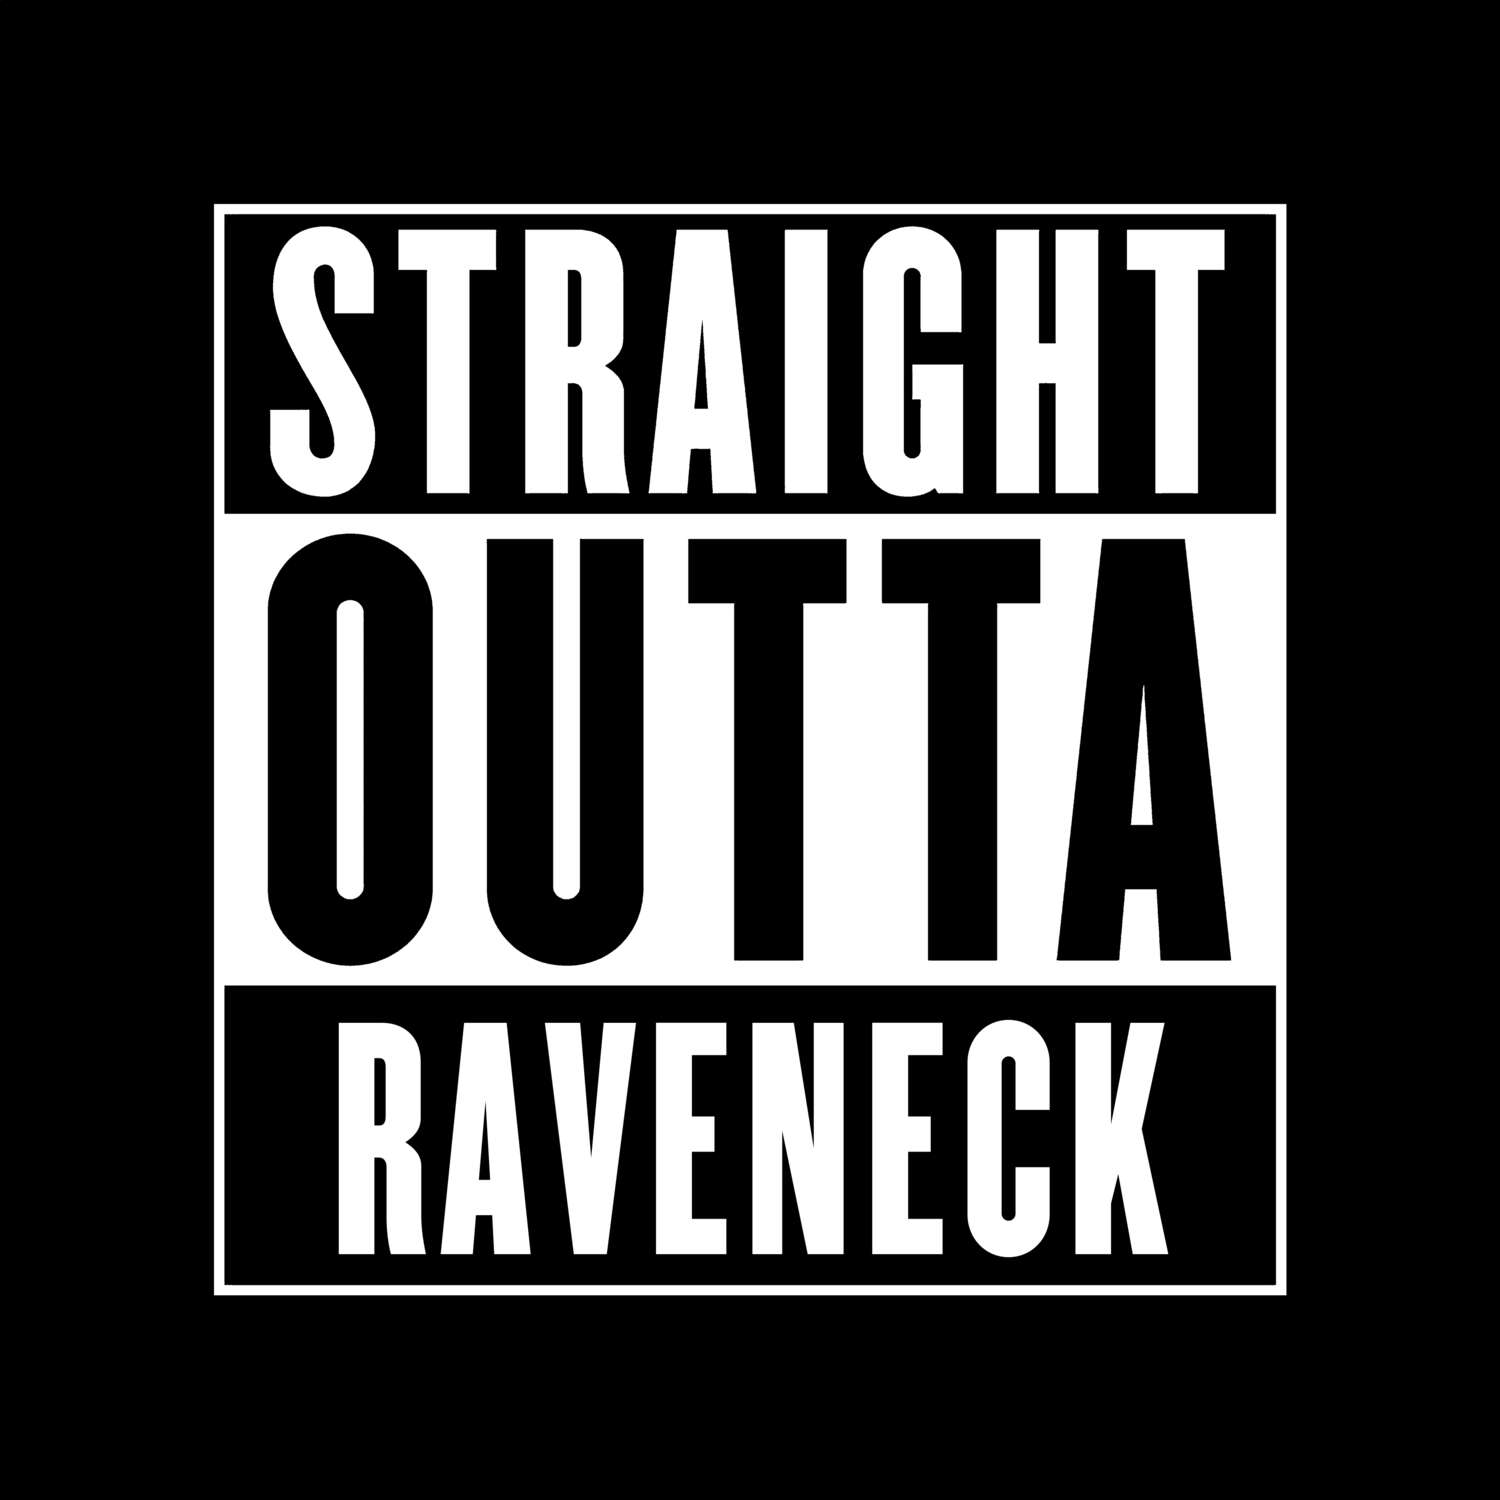 Raveneck T-Shirt »Straight Outta«